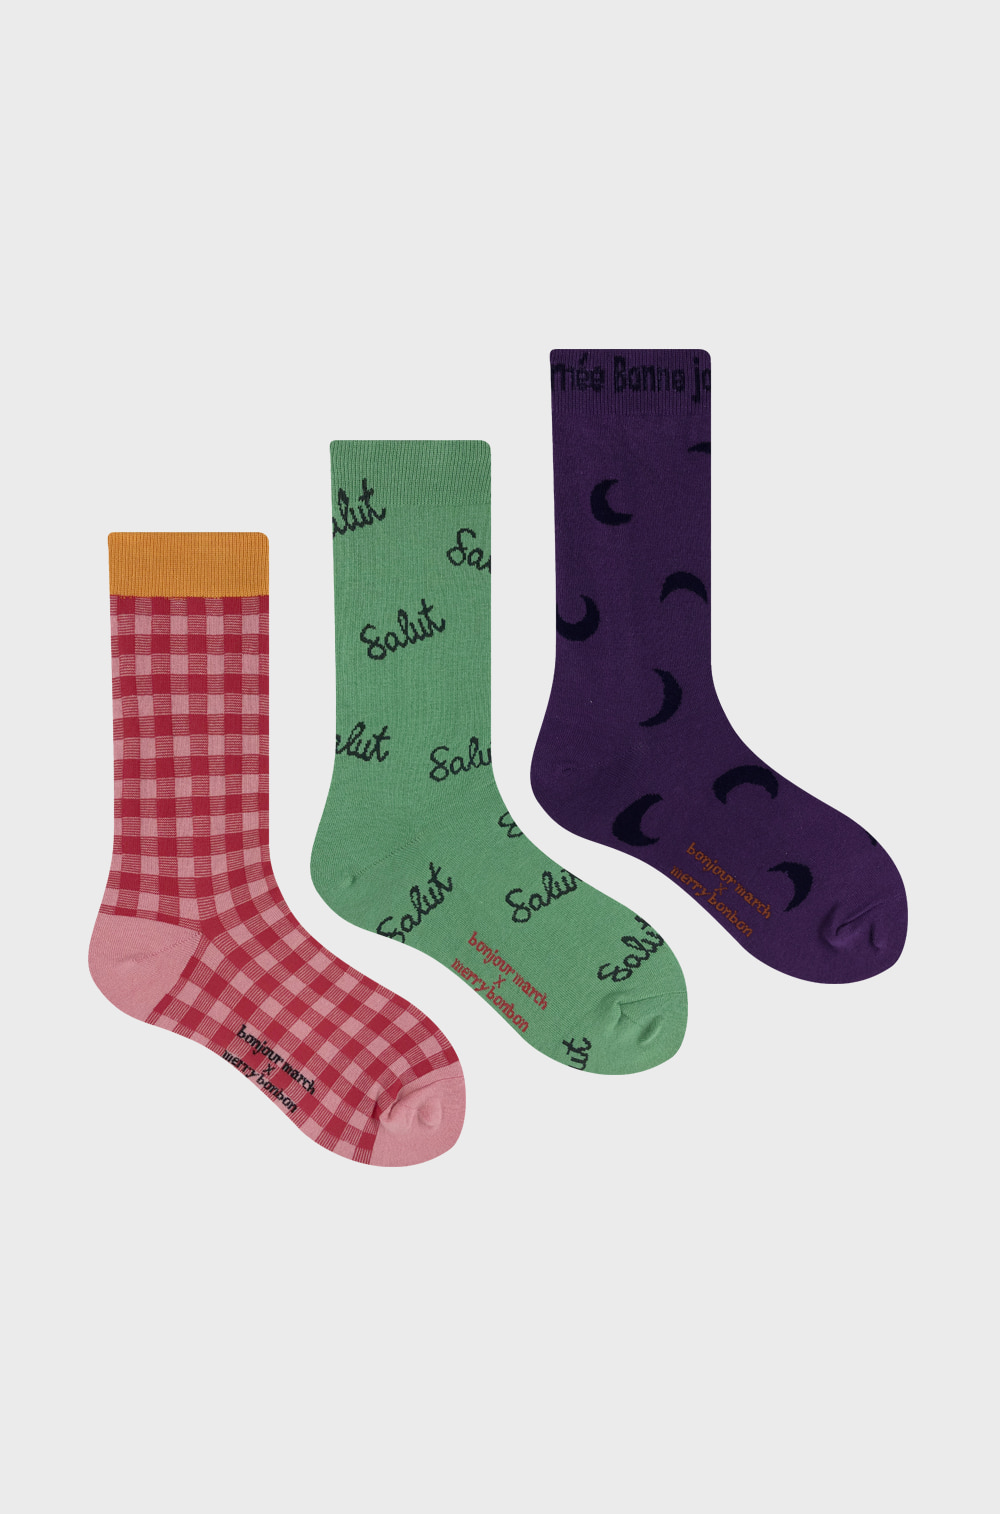 Bonjourmarch x merrybonbon socks_merry merry socks